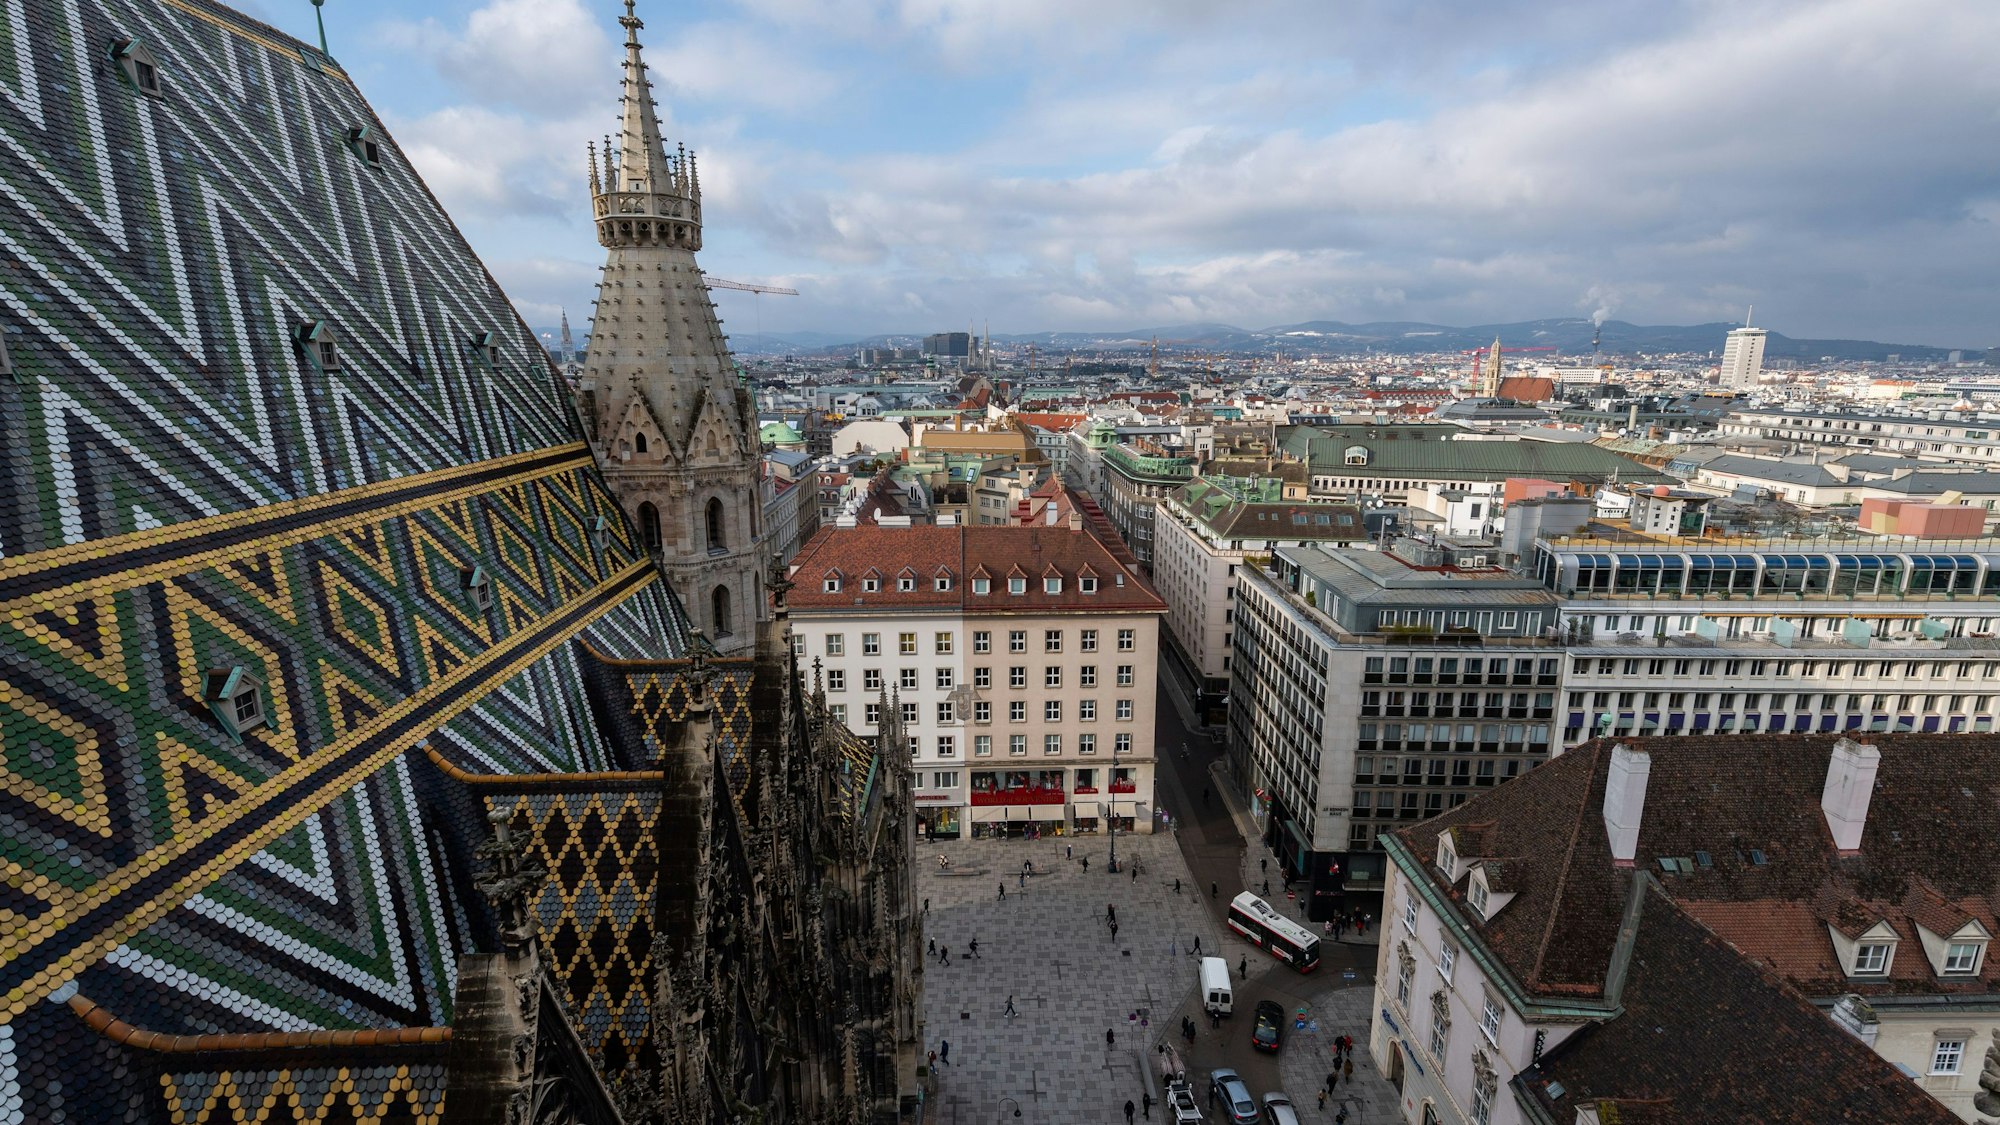 Blick vom Nordturm des Stephansdoms auf Wien, hier im Januar 2020.